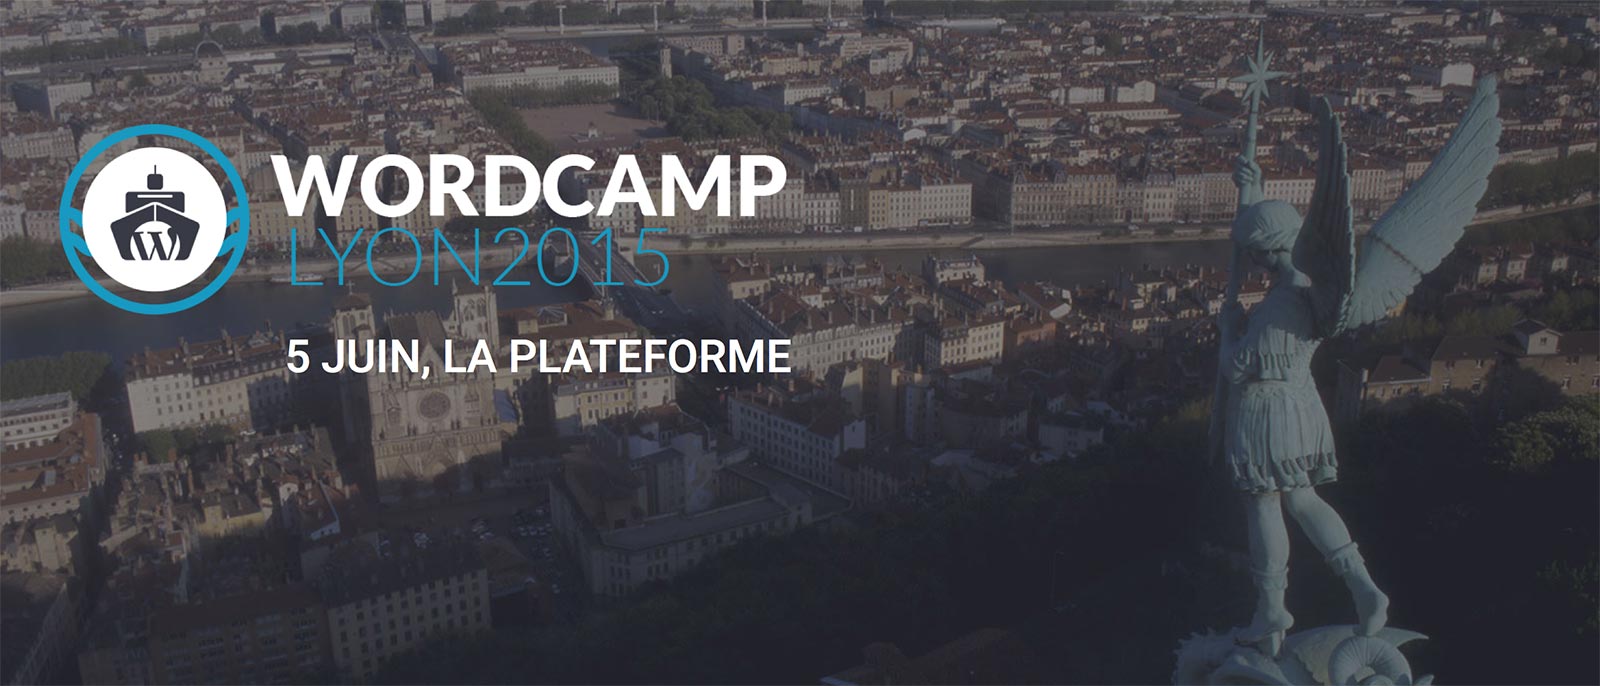 Wordcamp Lyon 2015